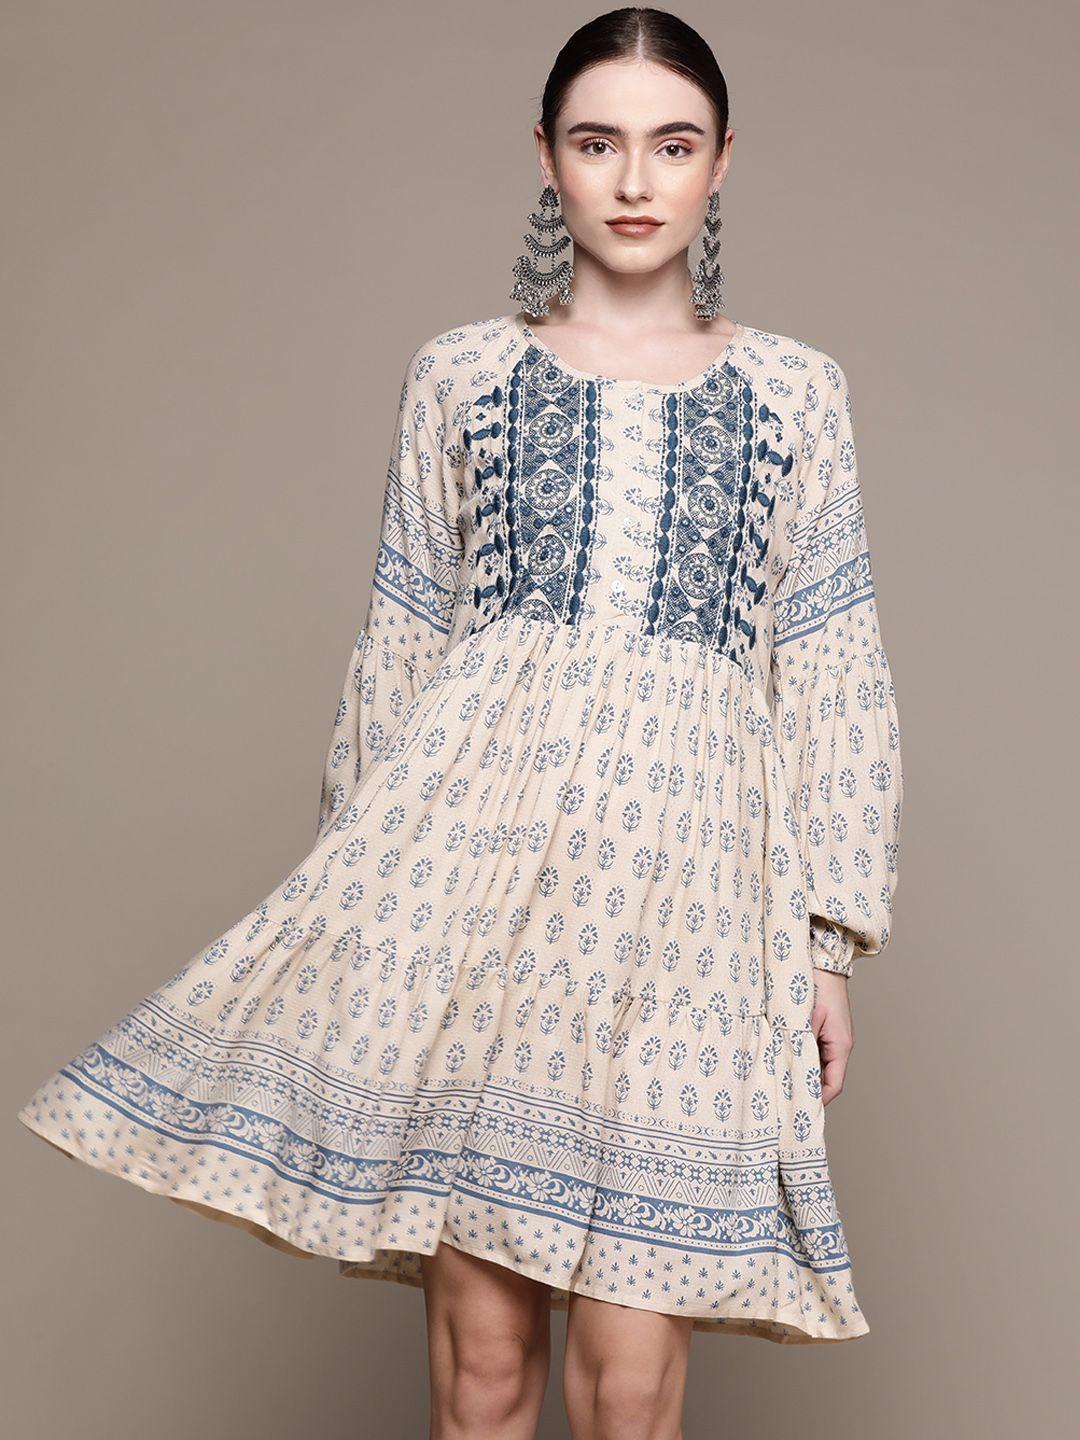 ishin beige & navy blue ethnic motifs embroidered ethnic cotton a-line dress